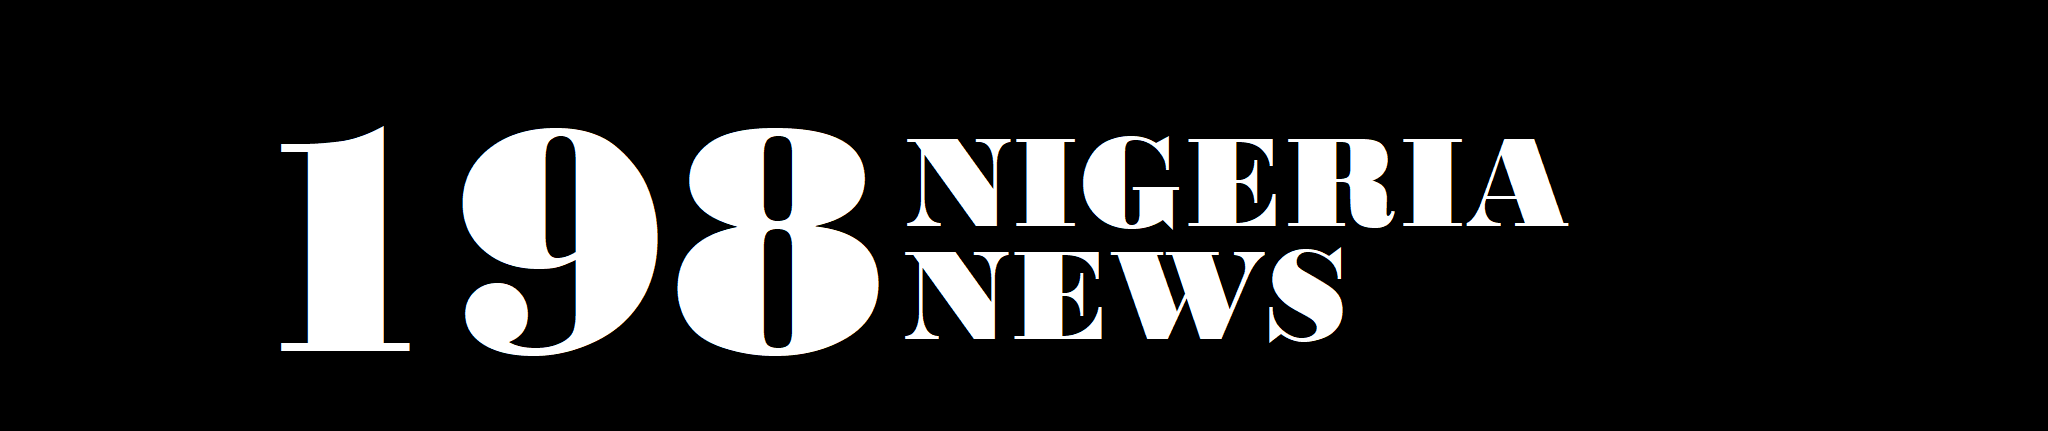 198 Nigeria News's profile banner